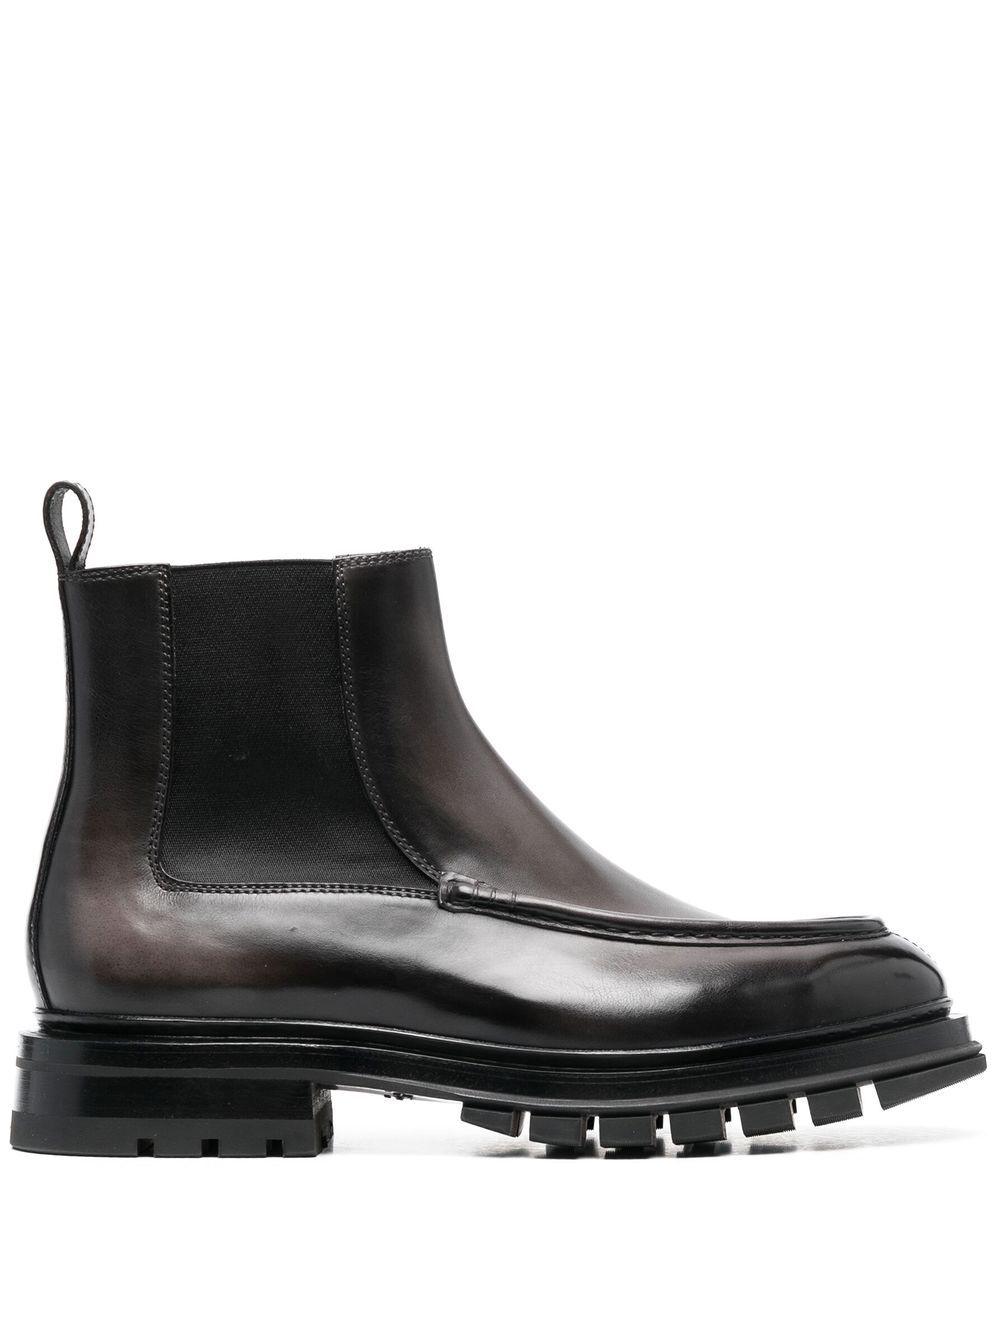 Santoni leather ankle boots - Black von Santoni